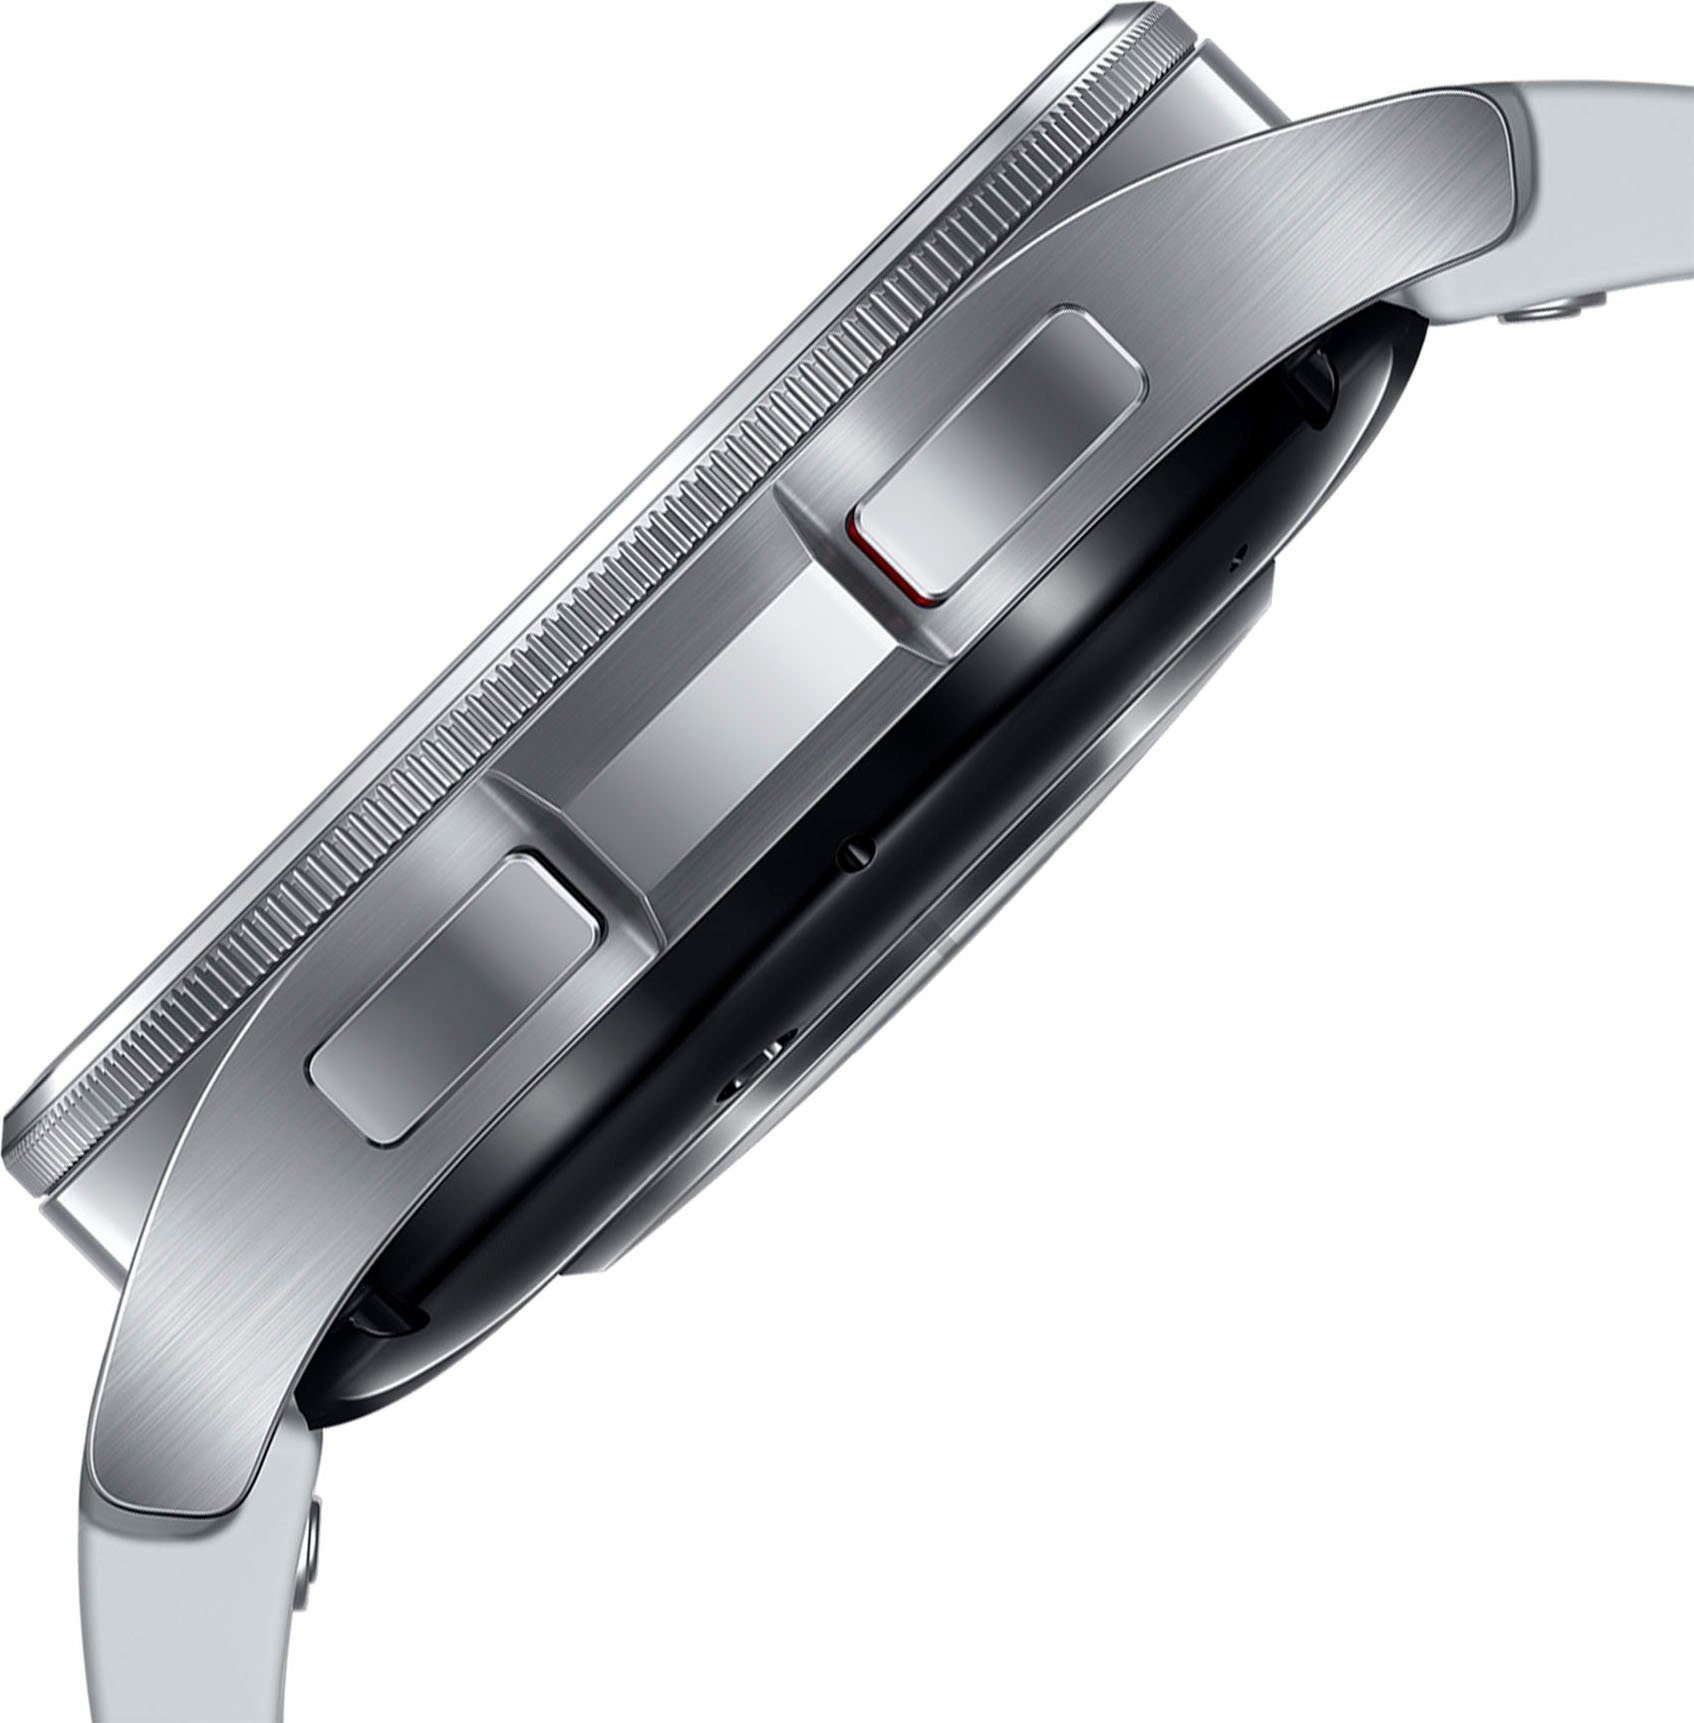 cm/1,3 Classic | 43mm Watch LTE by silber 6 (3,33 Galaxy Smartwatch Zoll, silber Samsung) Wear Samsung OS